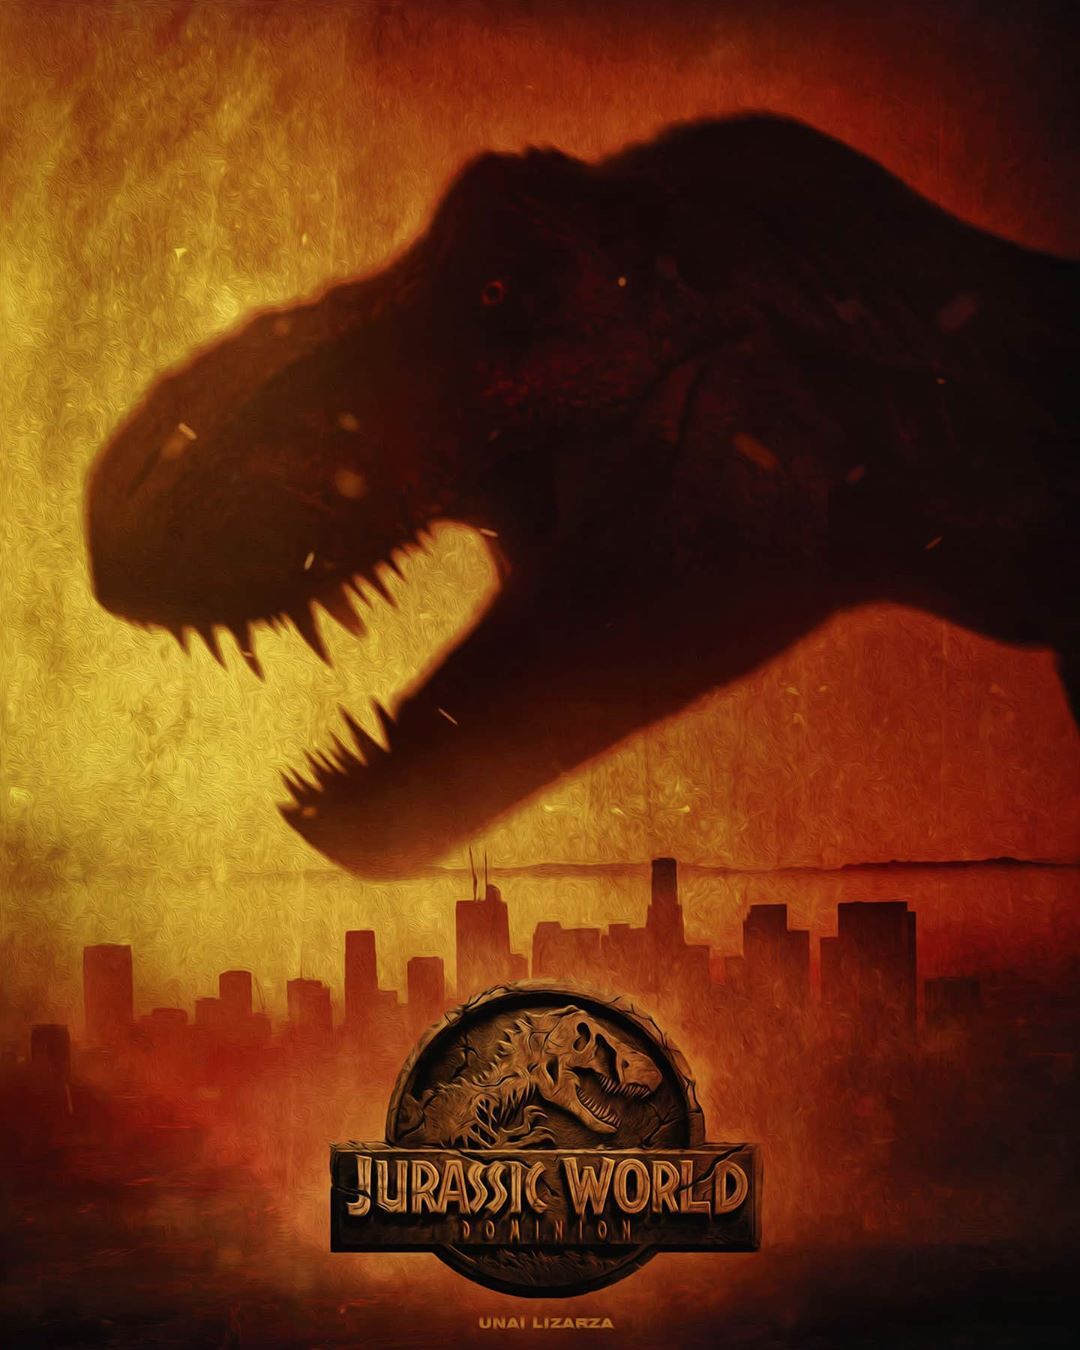 Jurassic World: Dominion for mac download